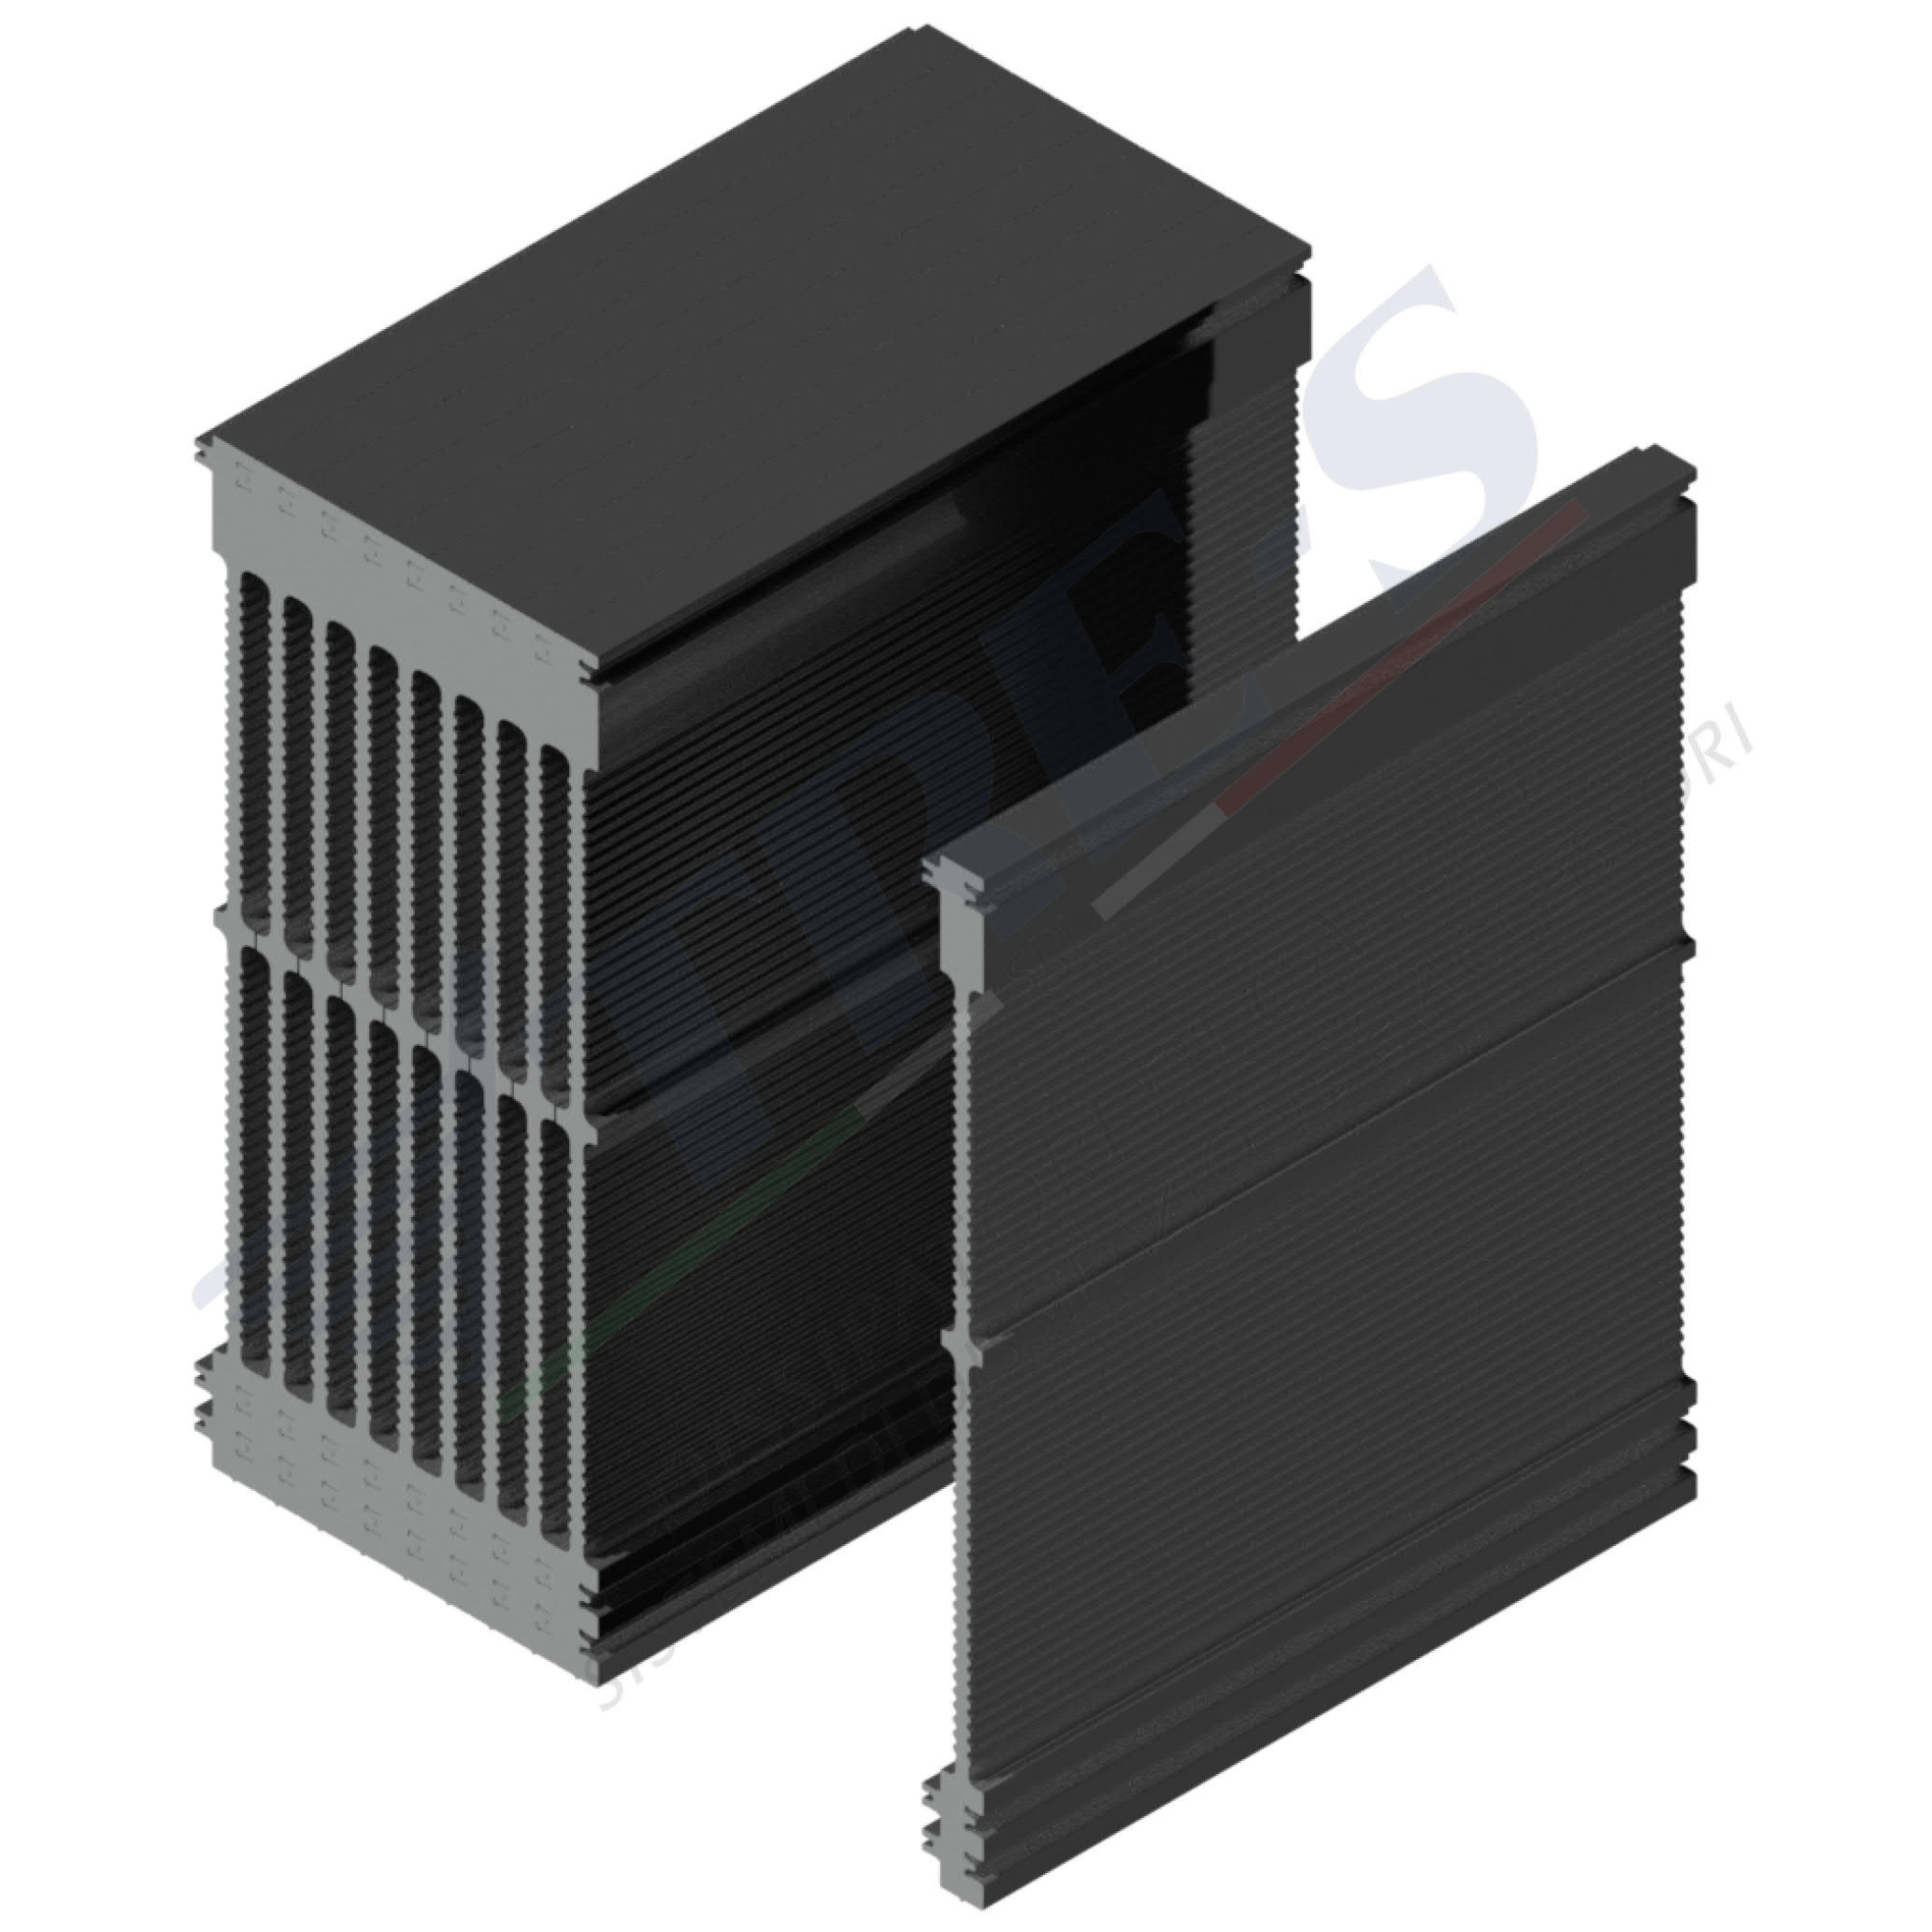 PRI1003C - Embedded heat sinks